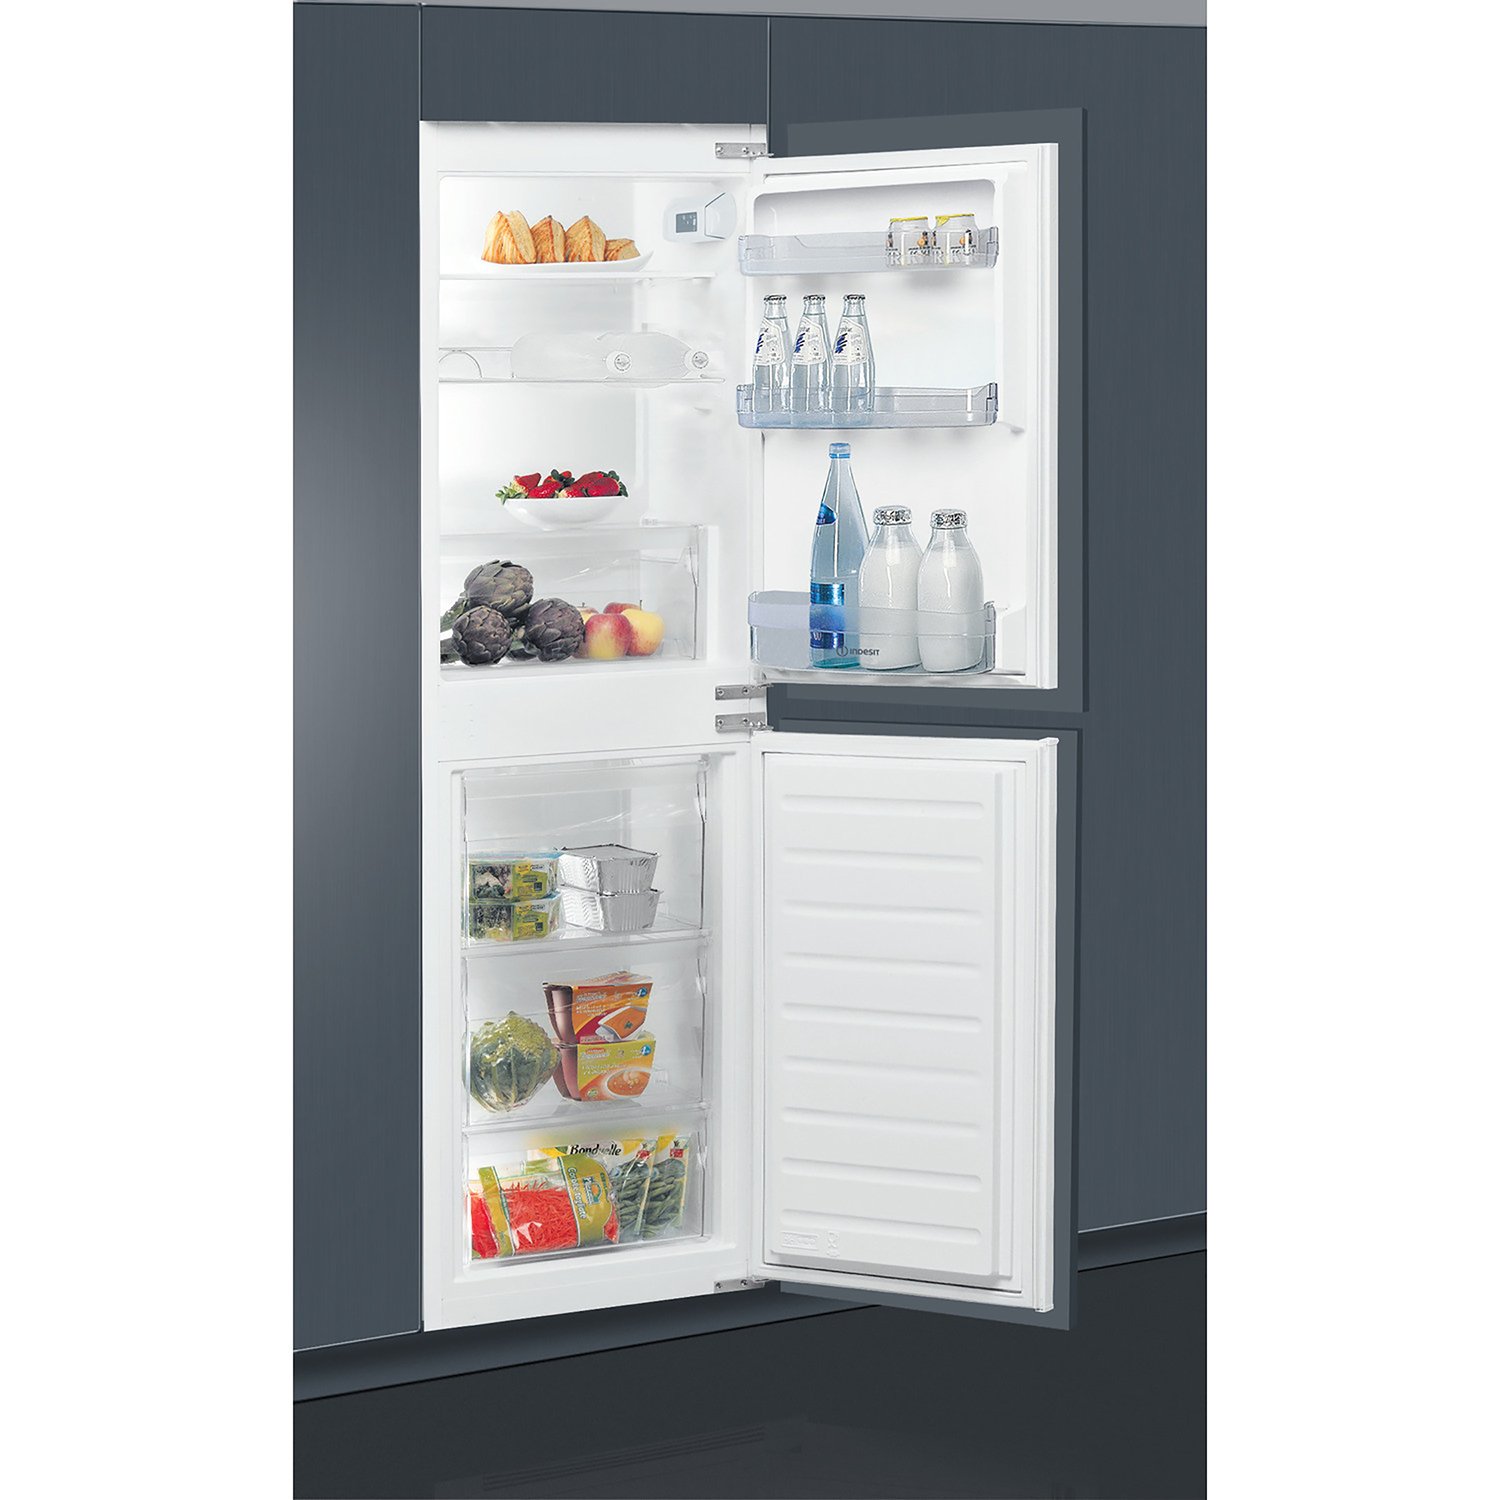 Indesit EIB15050A1D Integrated Fridge Freezer - White